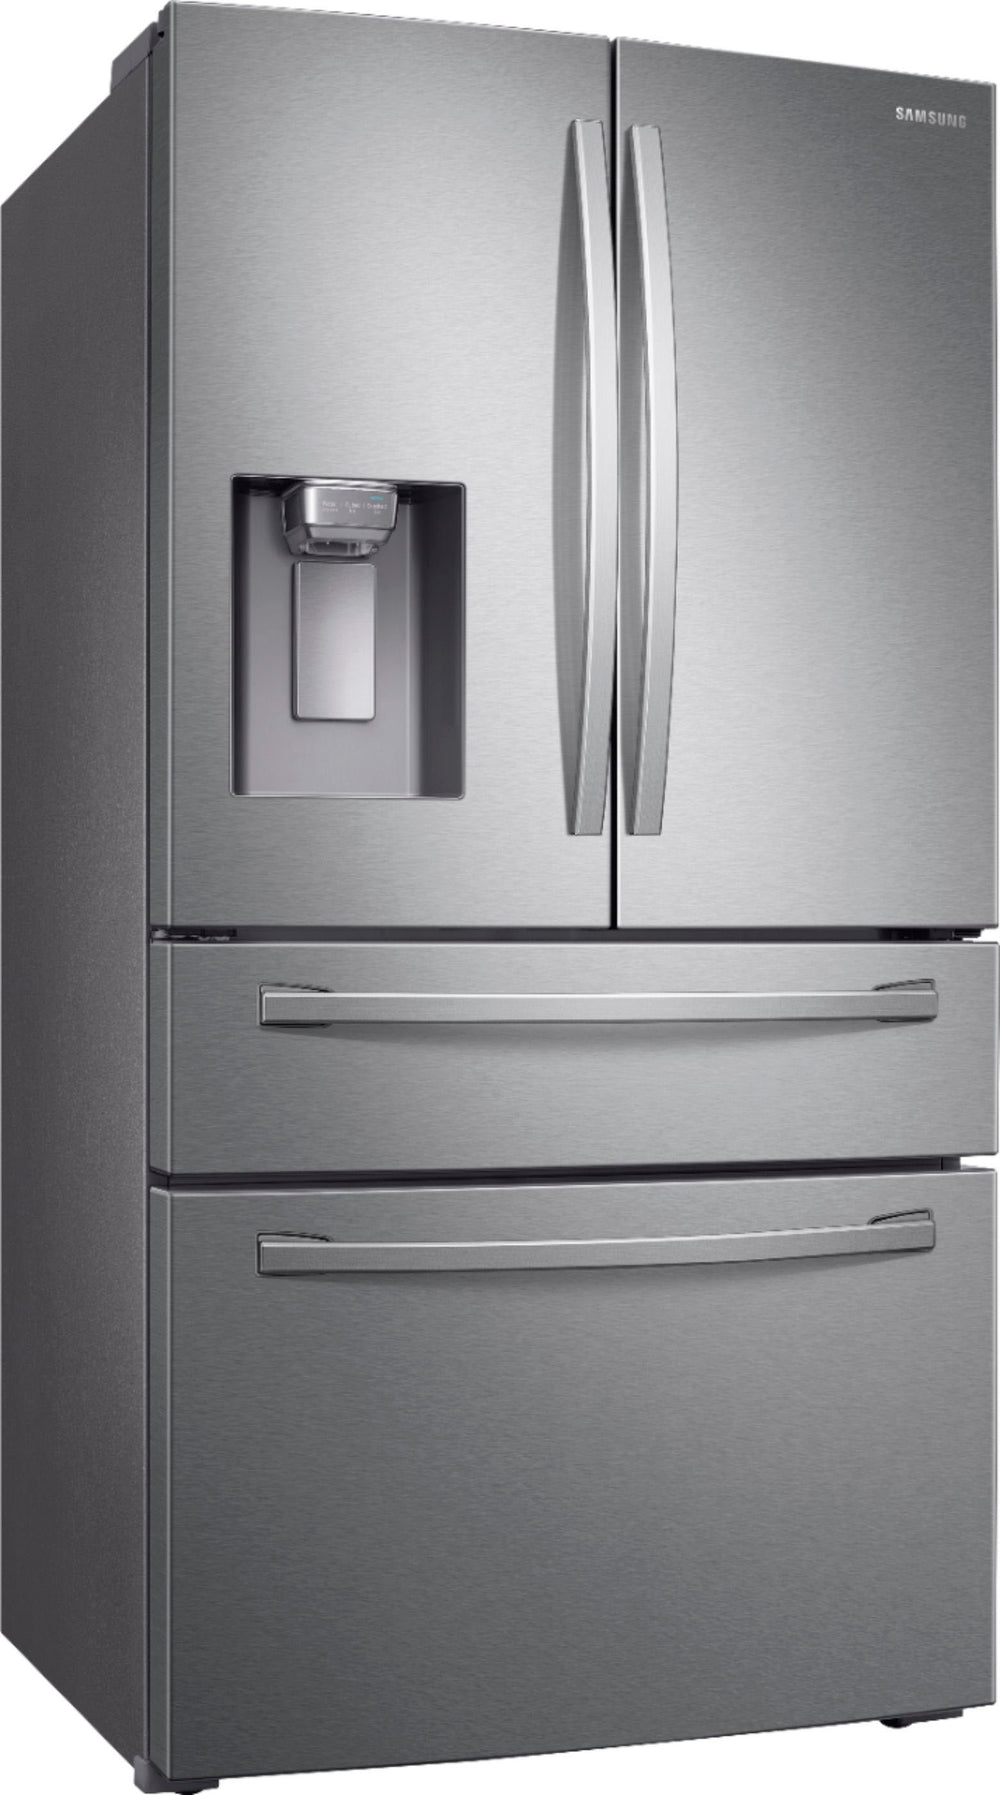 Samsung - OBX 22.6 cu. ft. 4-Door French Door Counter Depth Refrigerator with FlexZone Drawer - Stainless Steel_1